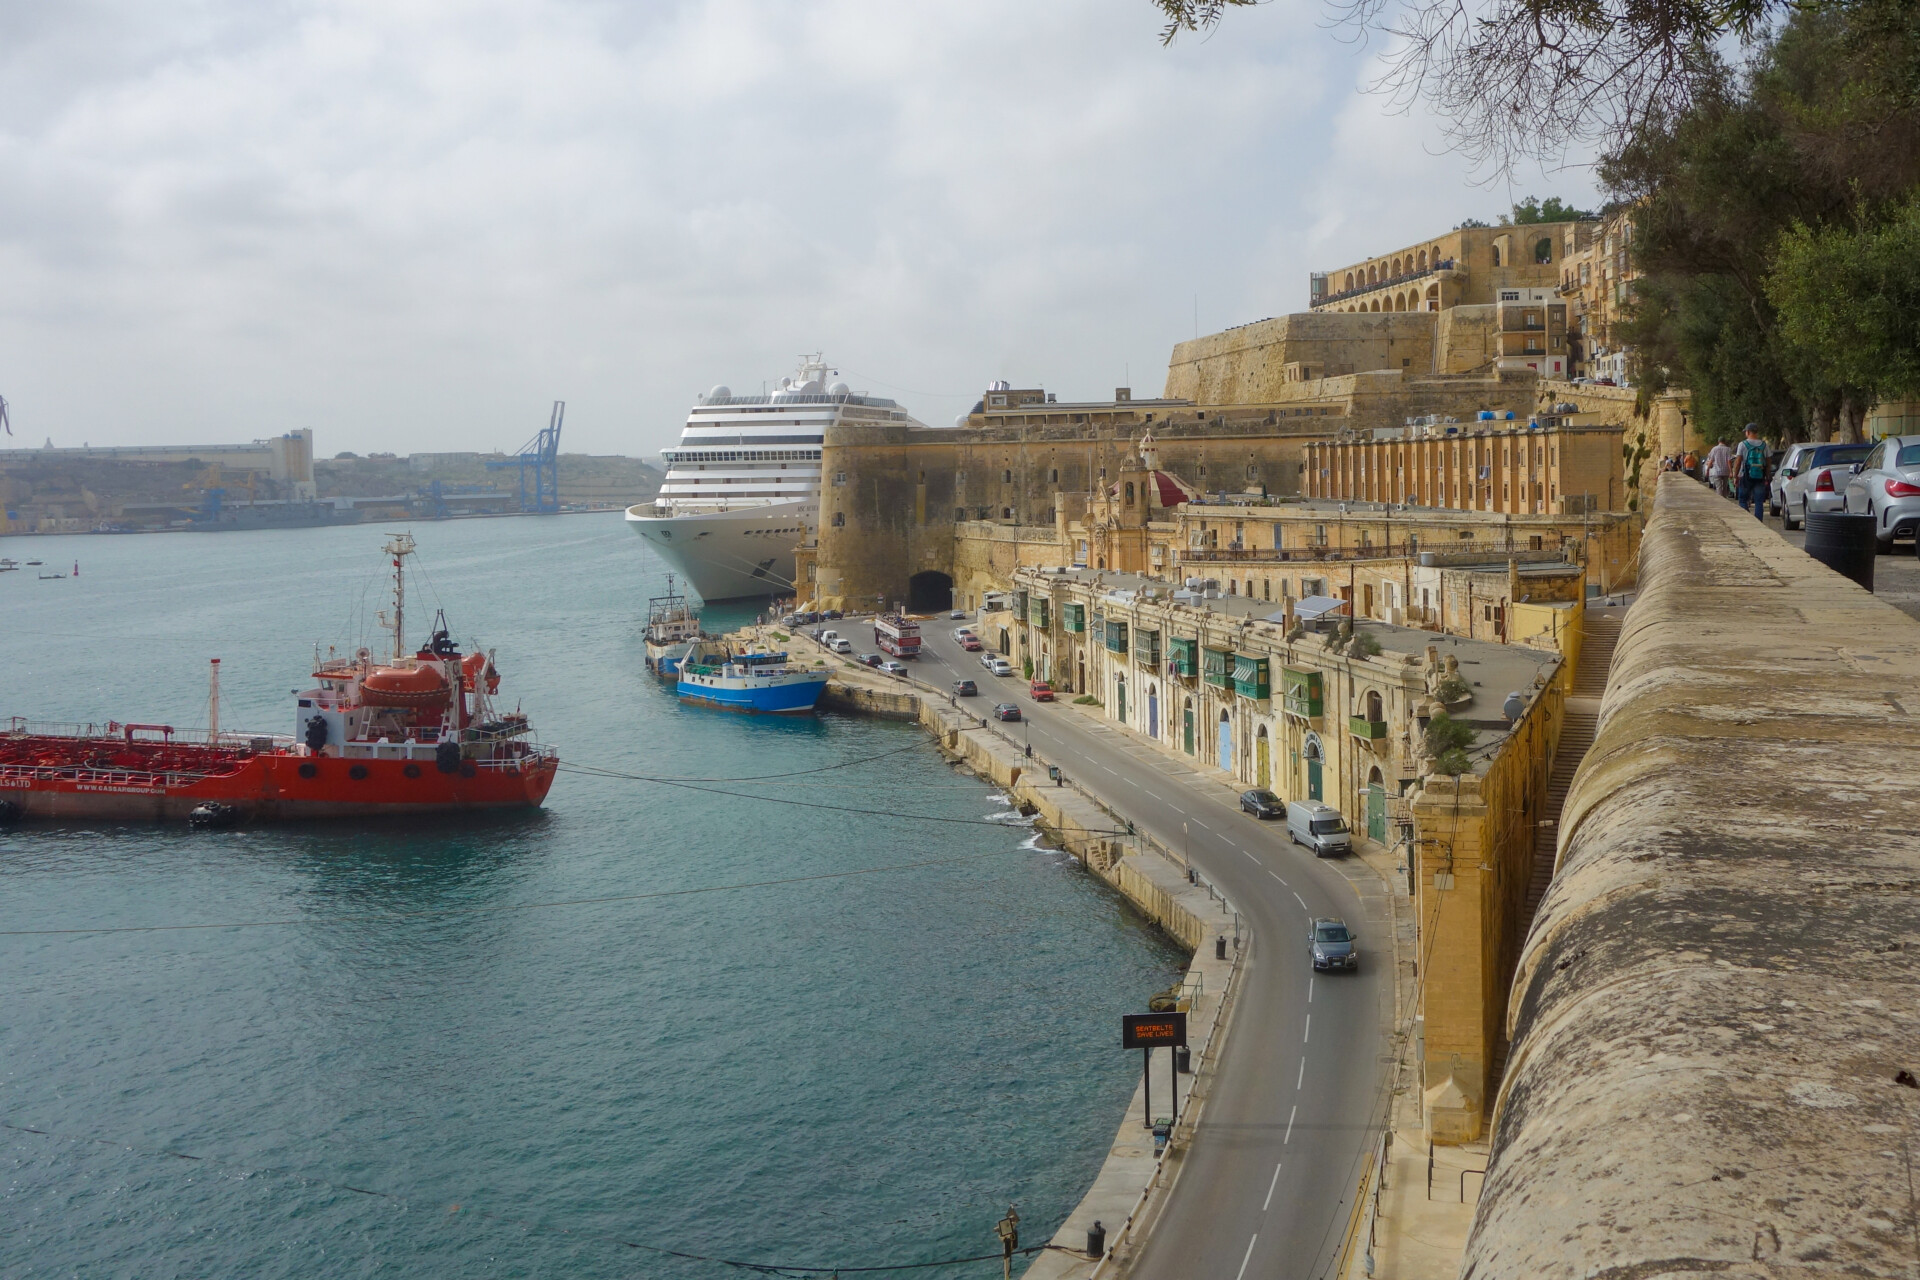 Her er top 5 oplevelser i Valletta på Malta